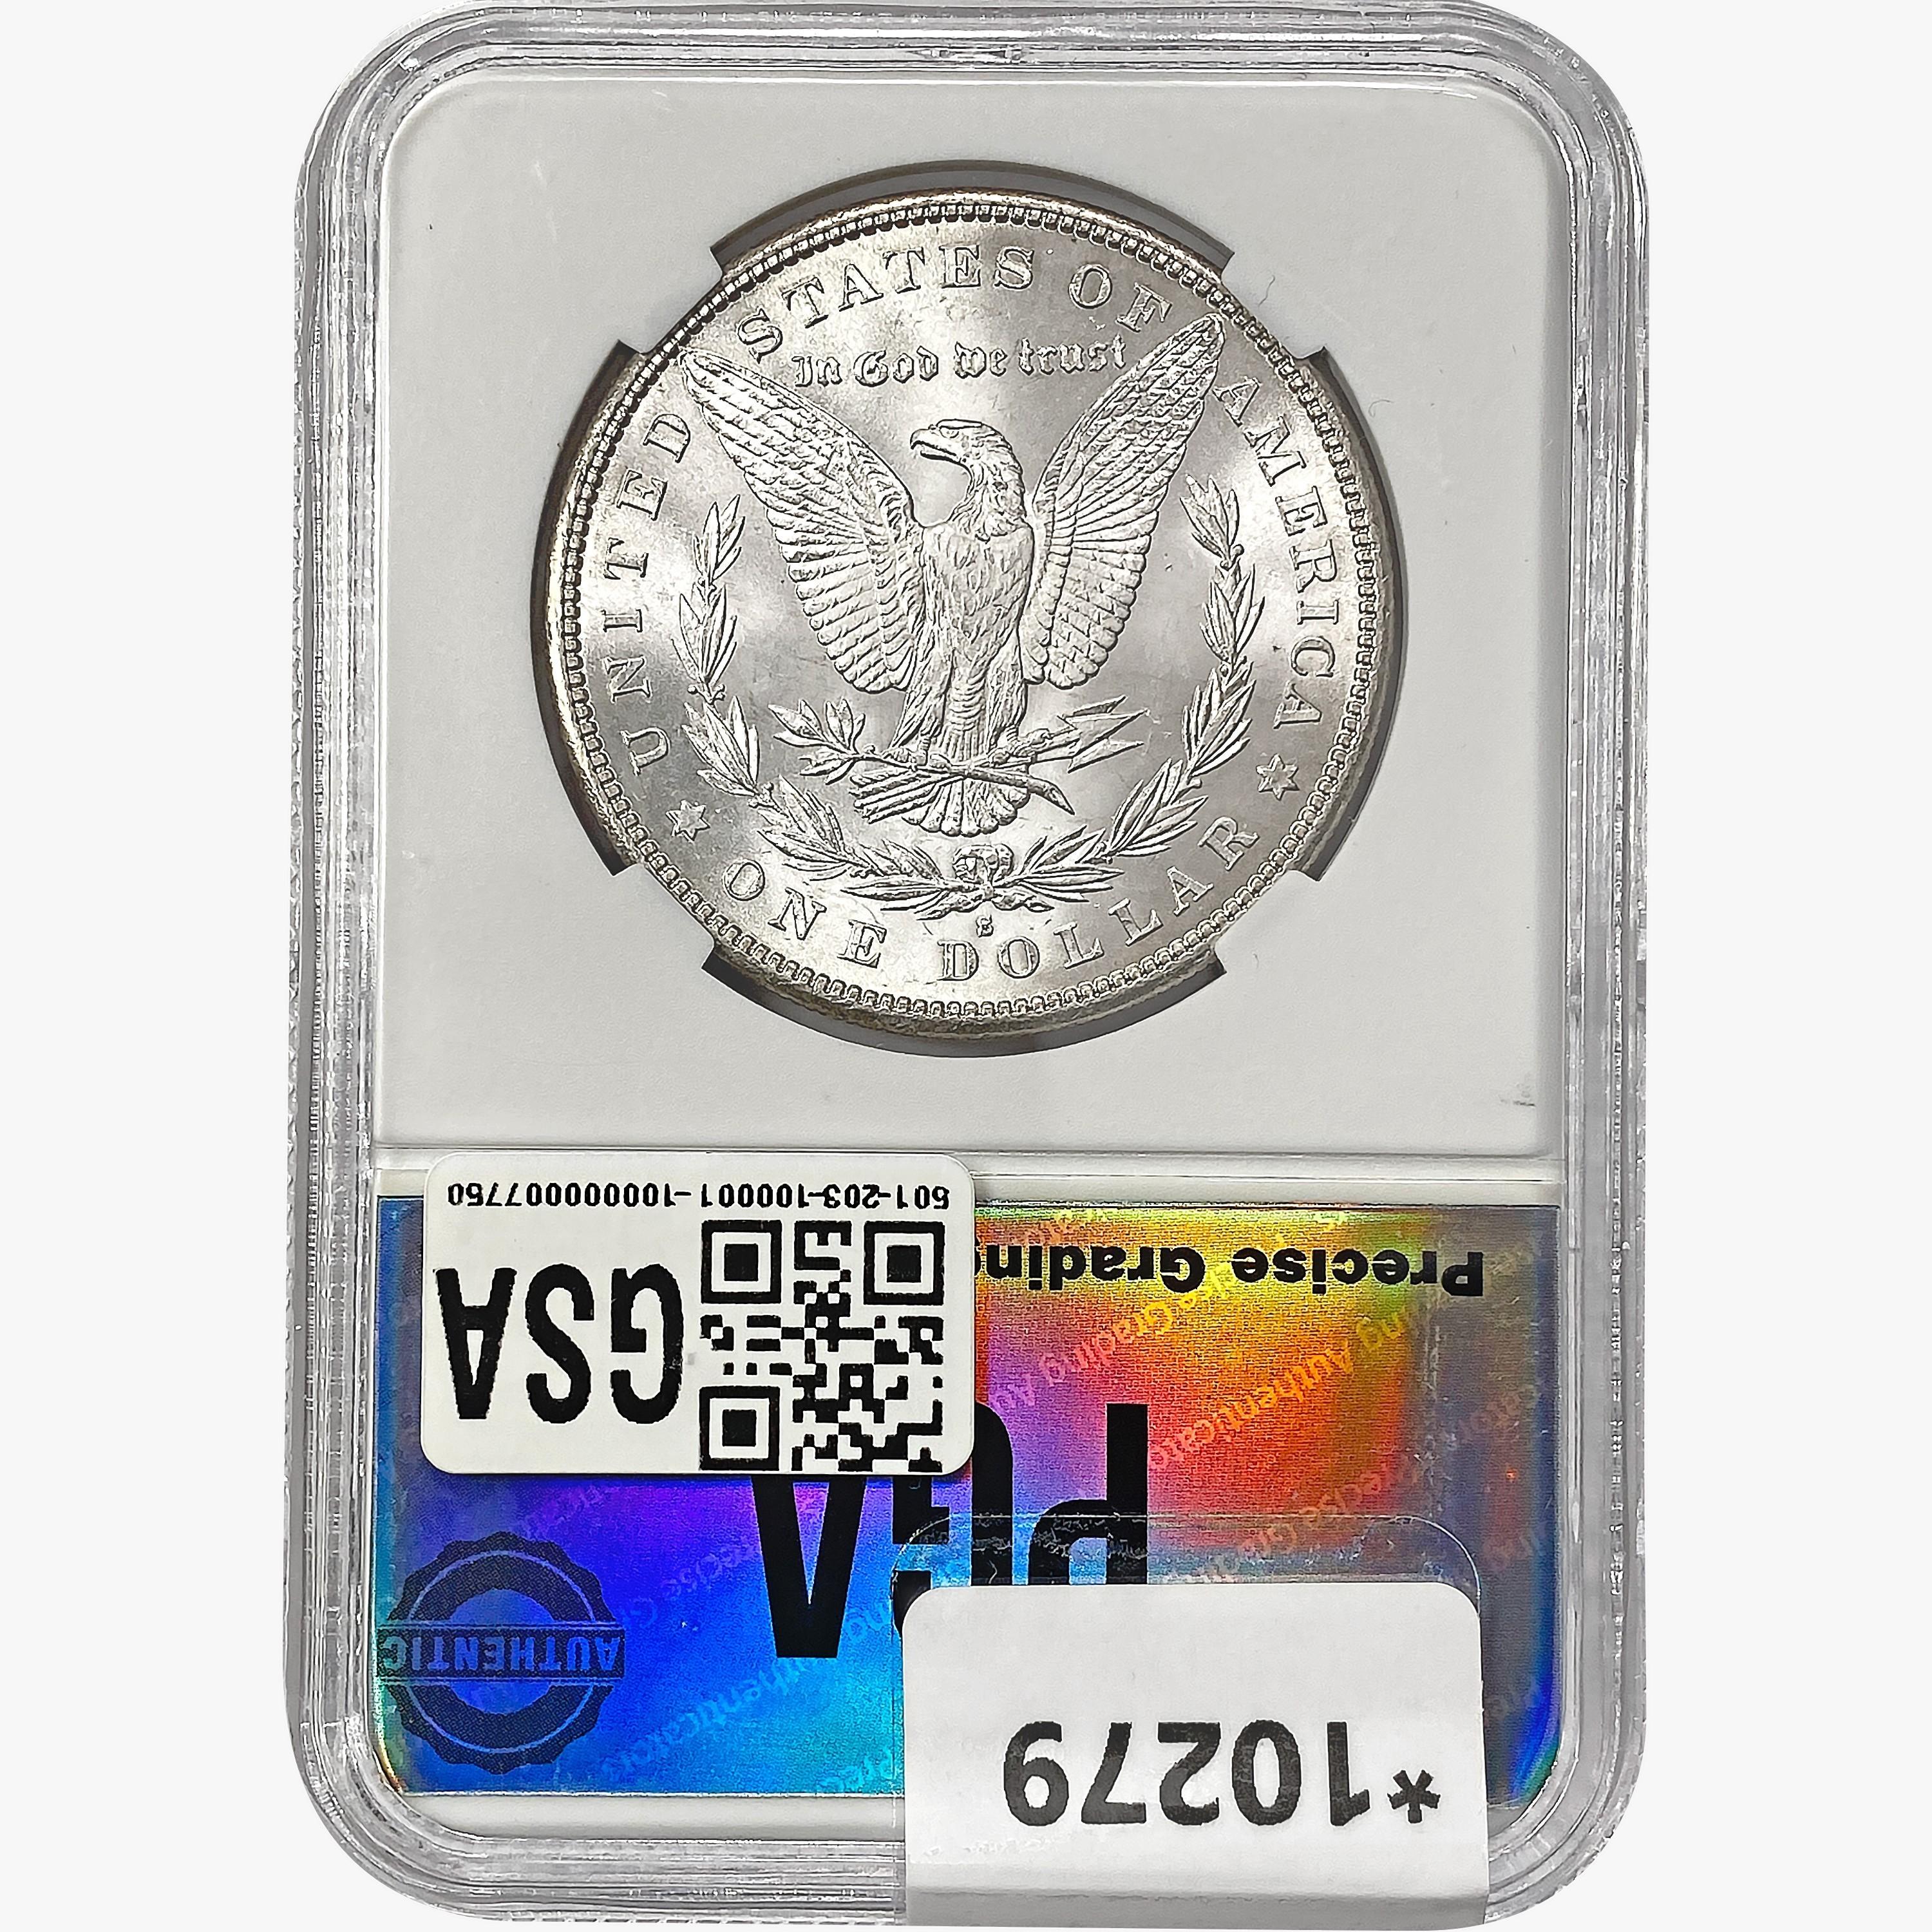 1880-S Morgan Silver Dollar PGA MS64